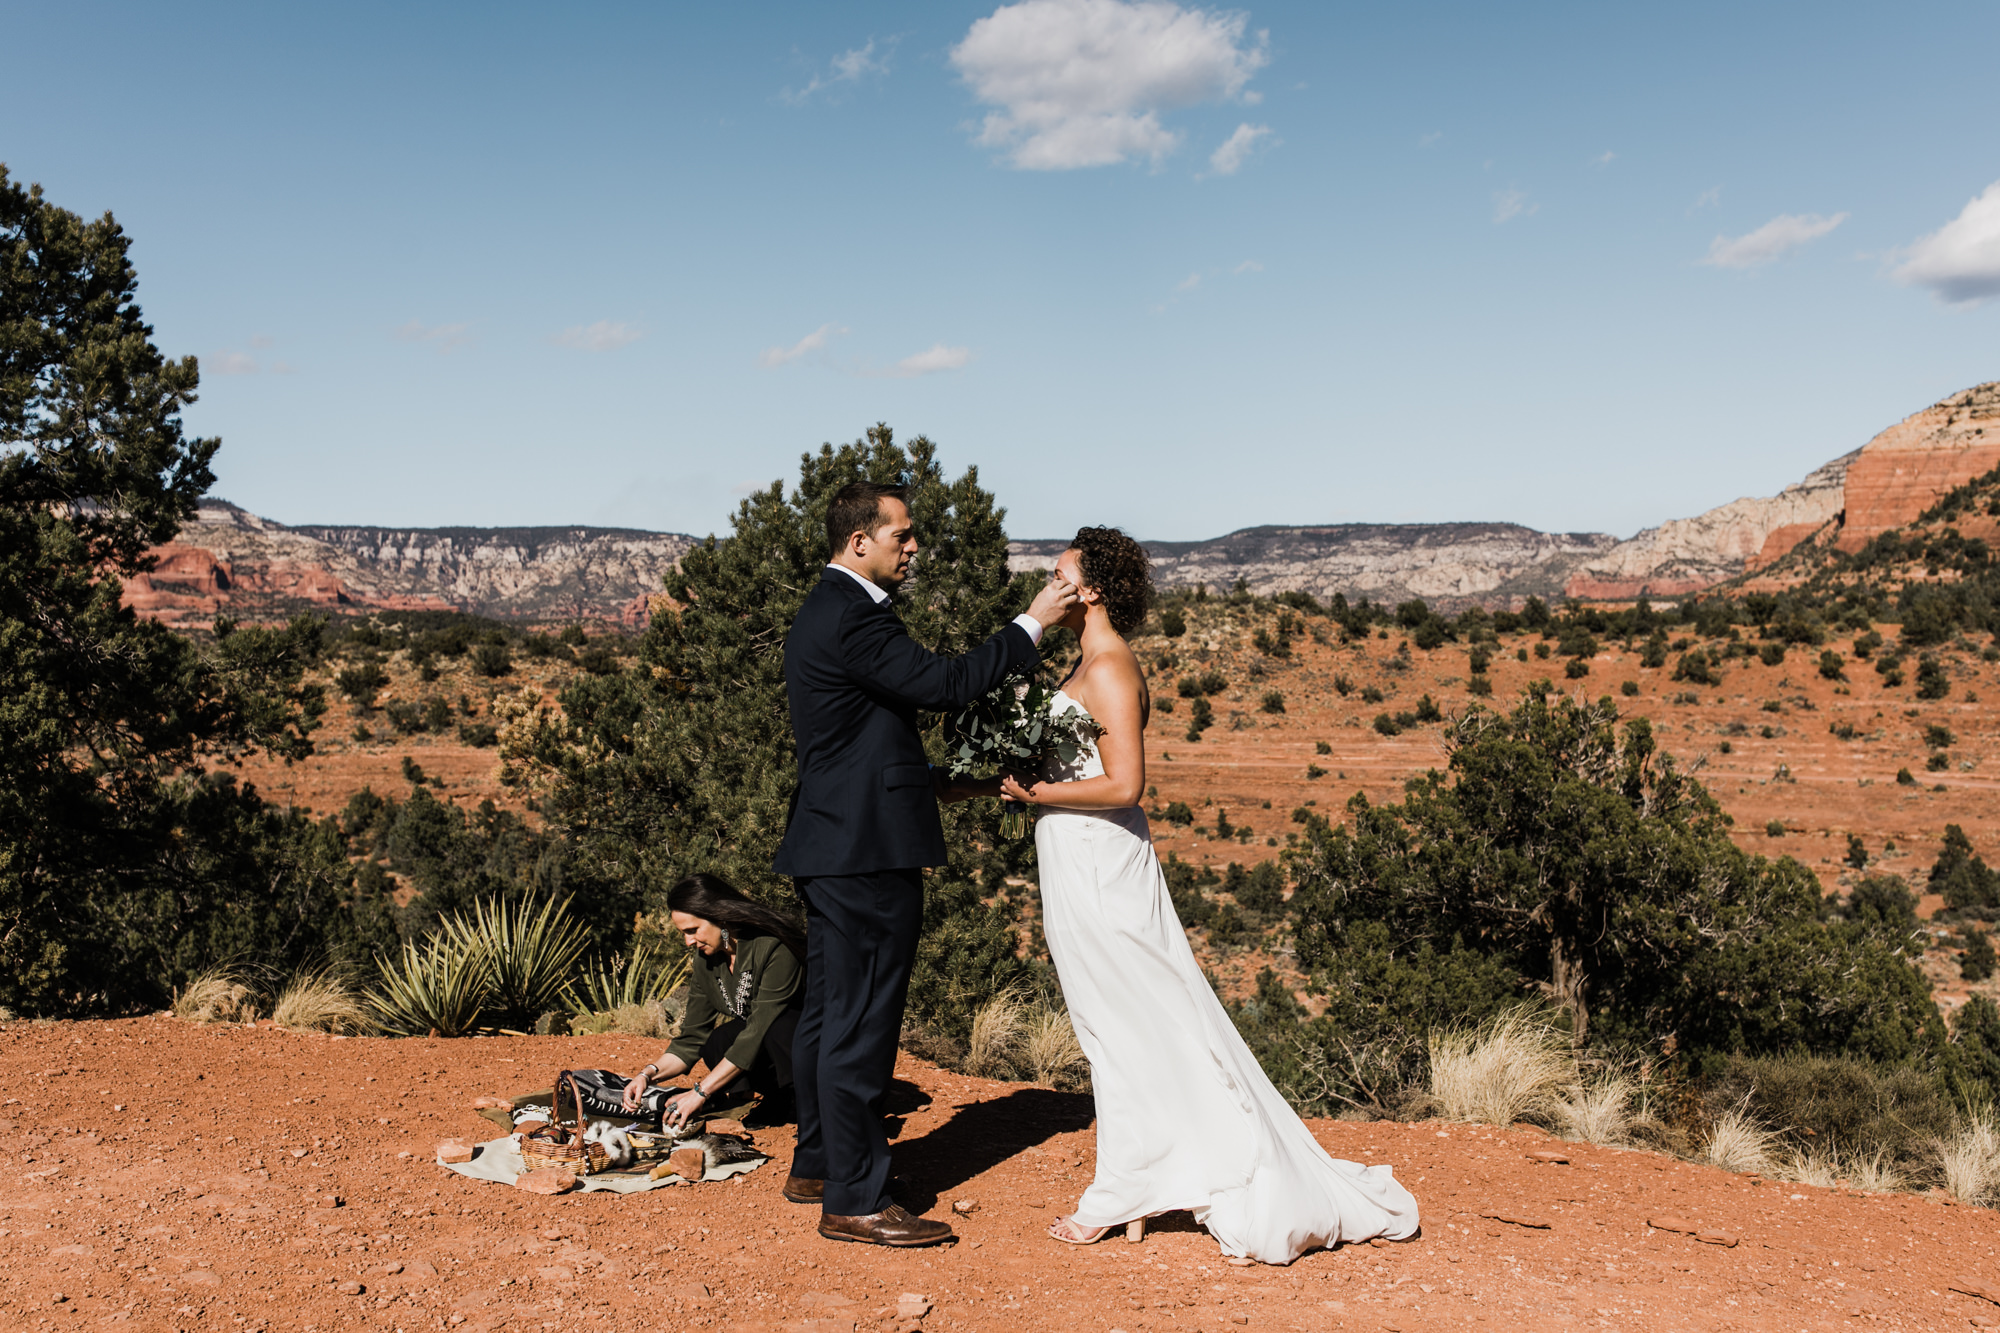 adventure elopement in sedona, arizona | travel destination wedding photographers | the hearnes adventure photography | www.thehearnes.com